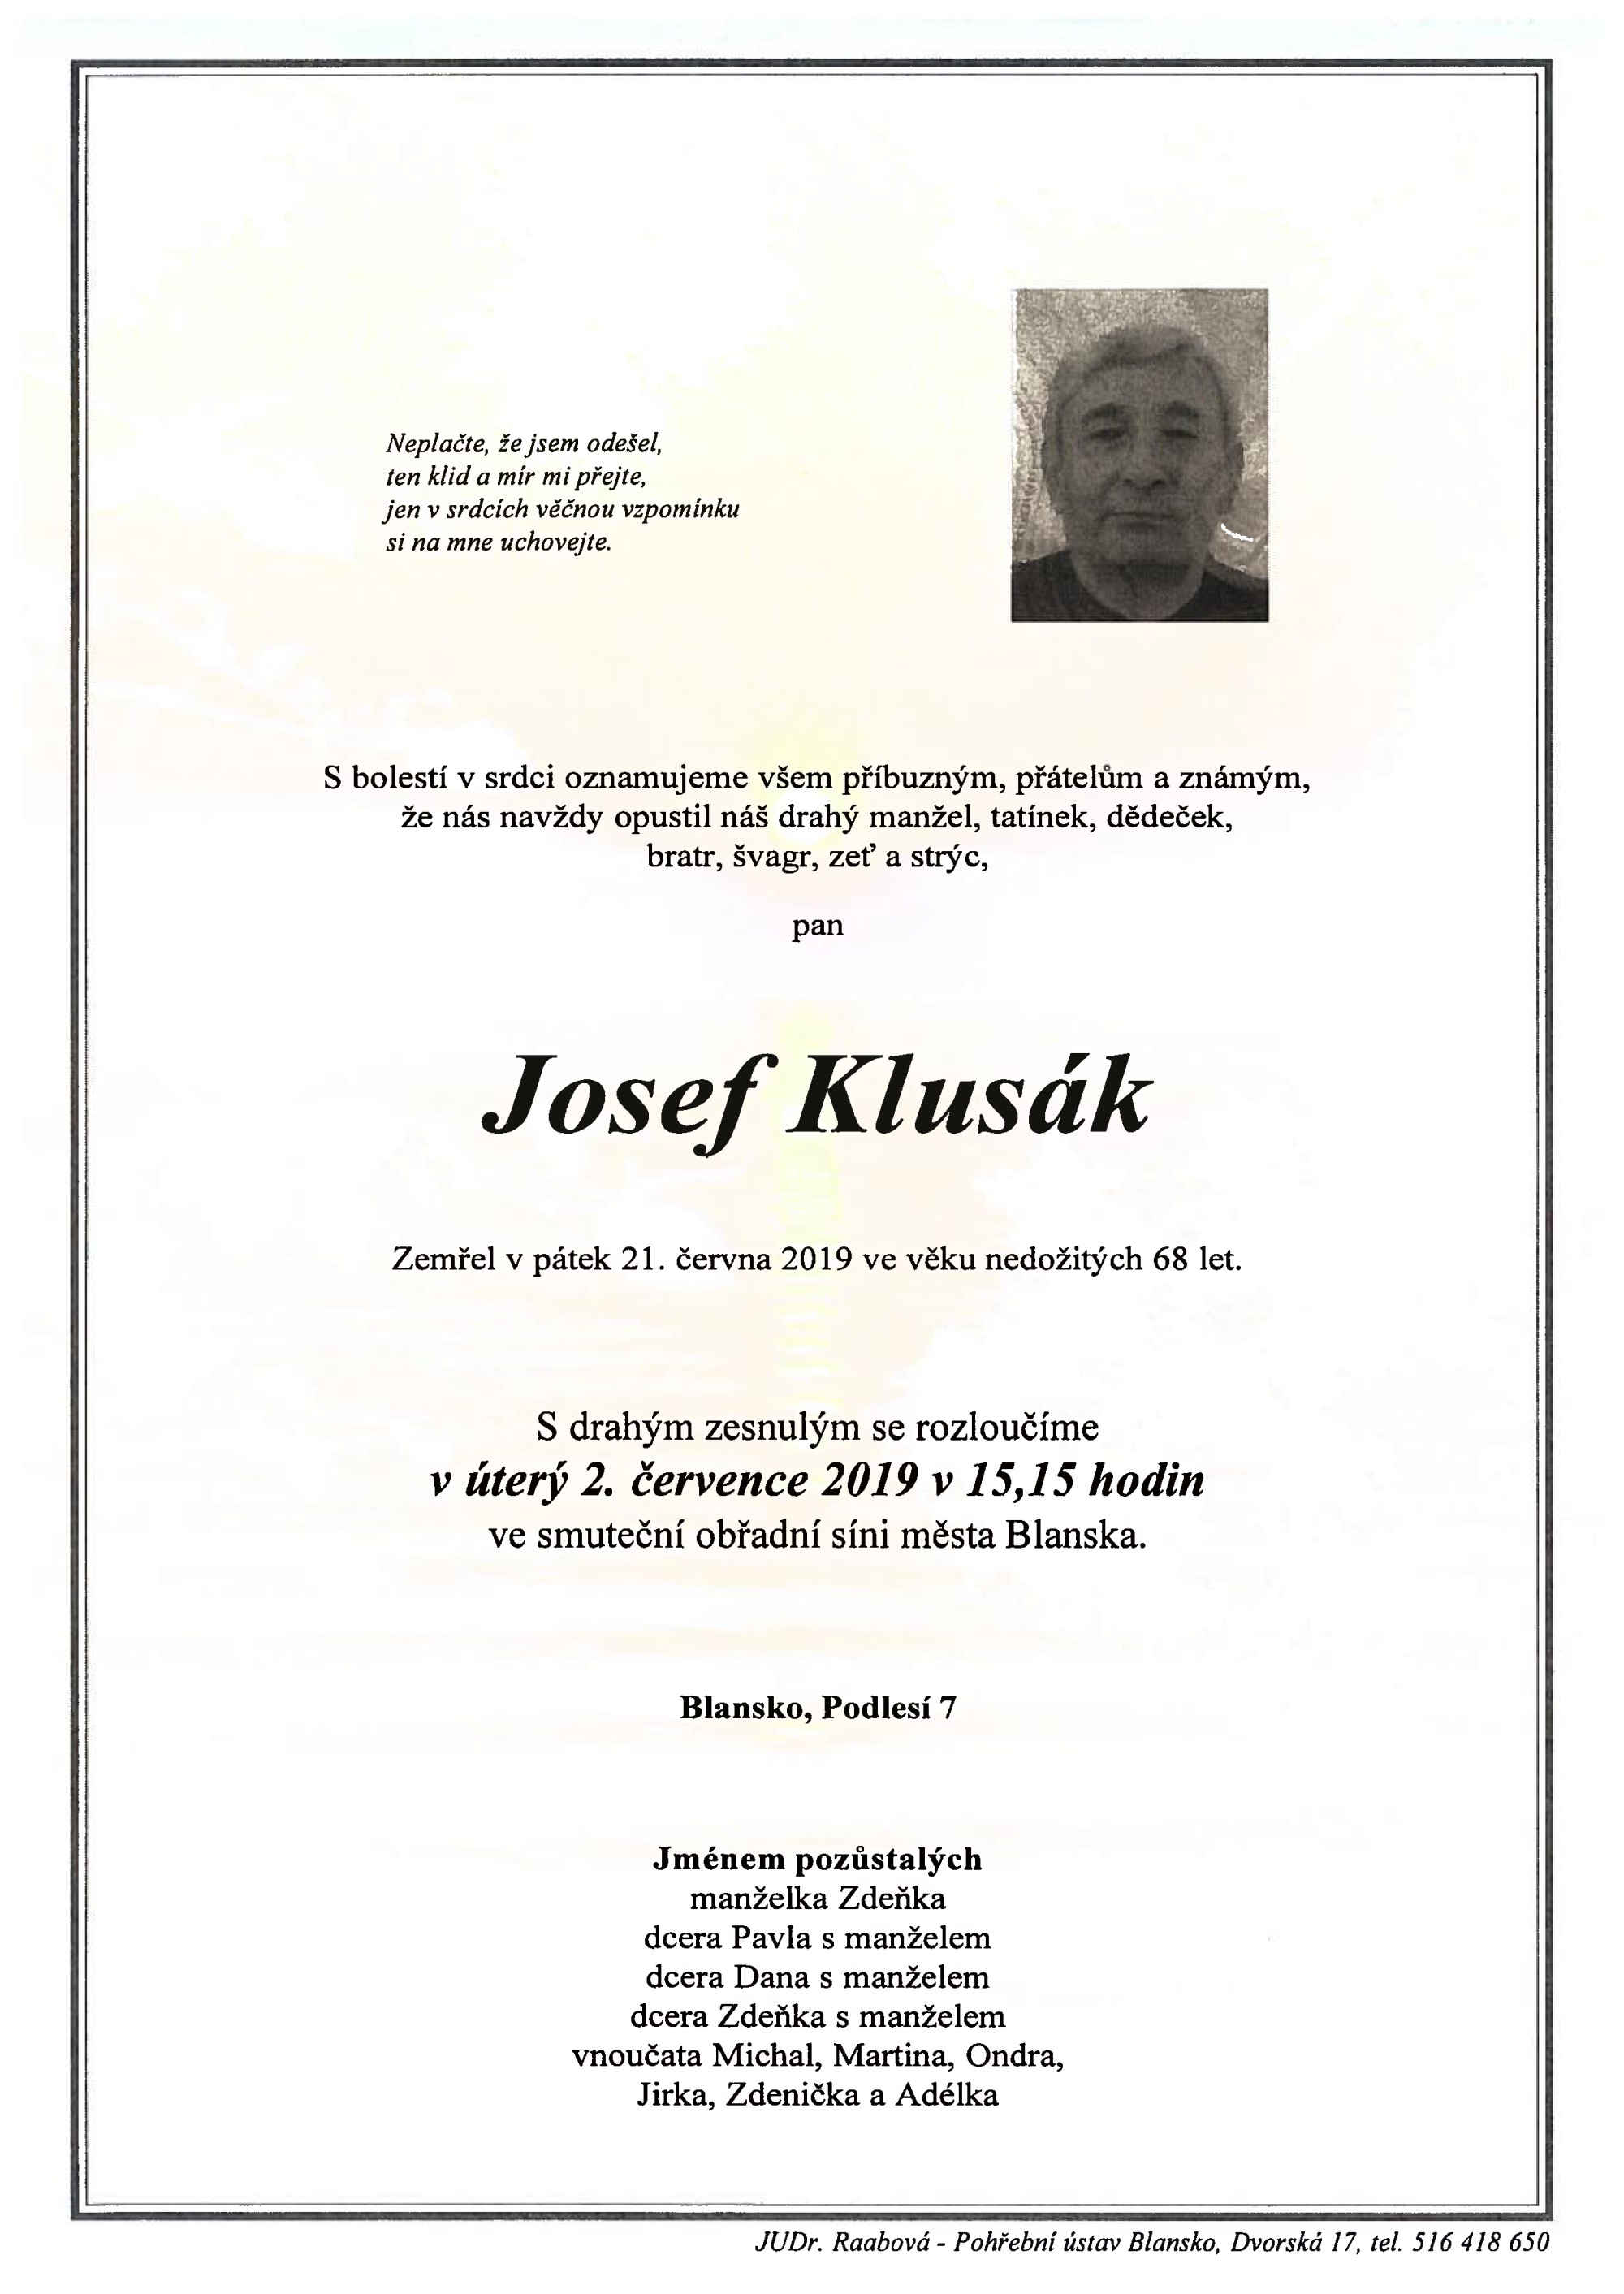 Josef Klusák